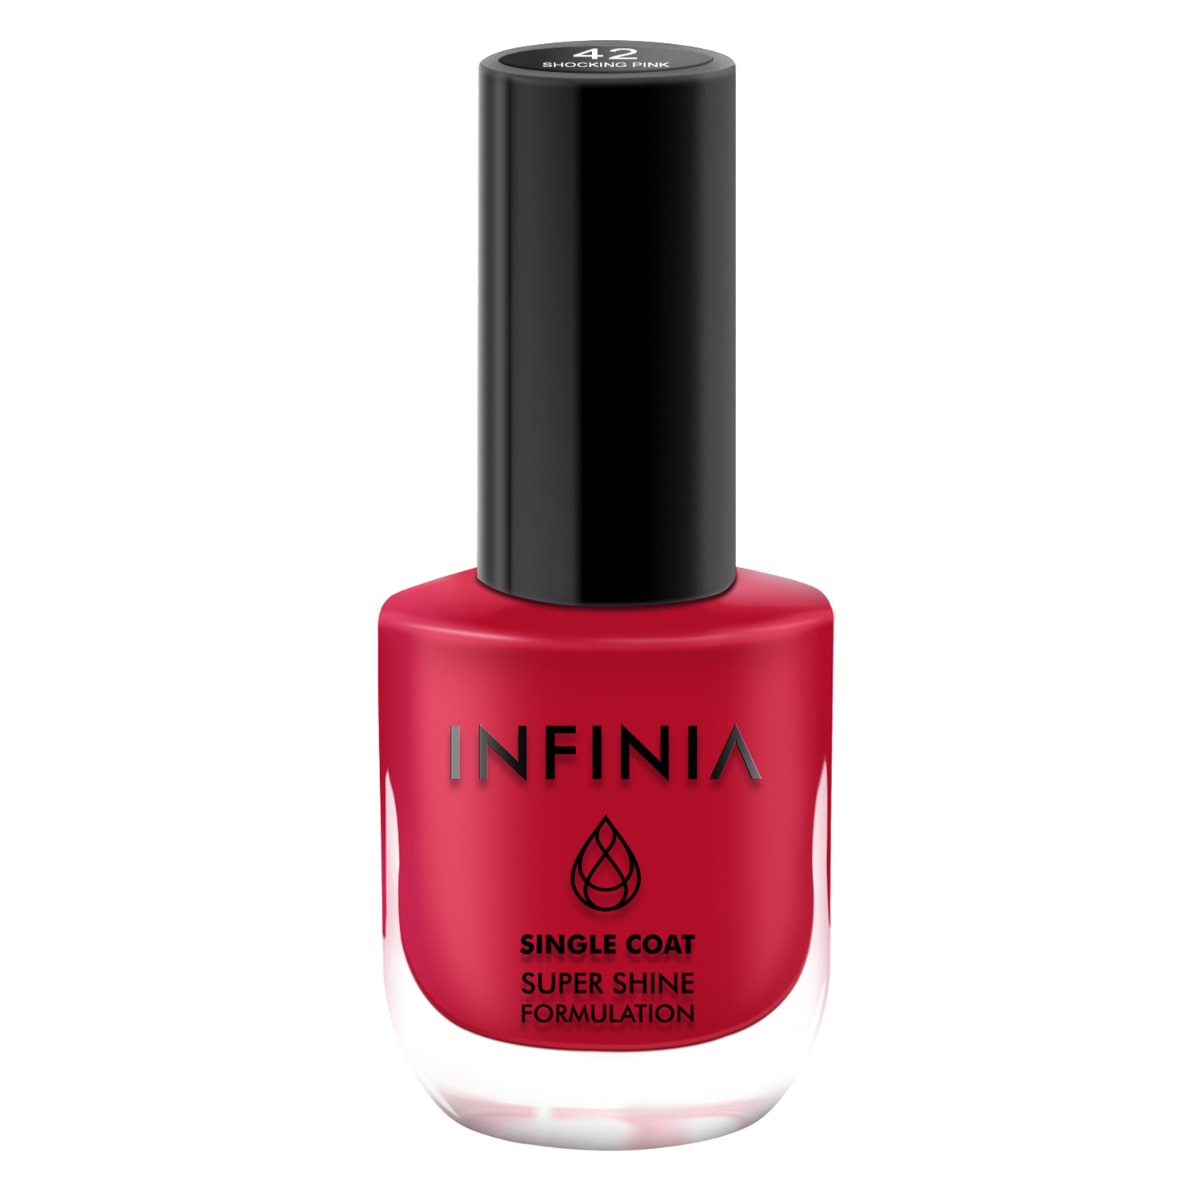 INFINIA Single Coat Super Shine Nail Polish With Ultra High Gloss, 12ml-042 Shocking Pink